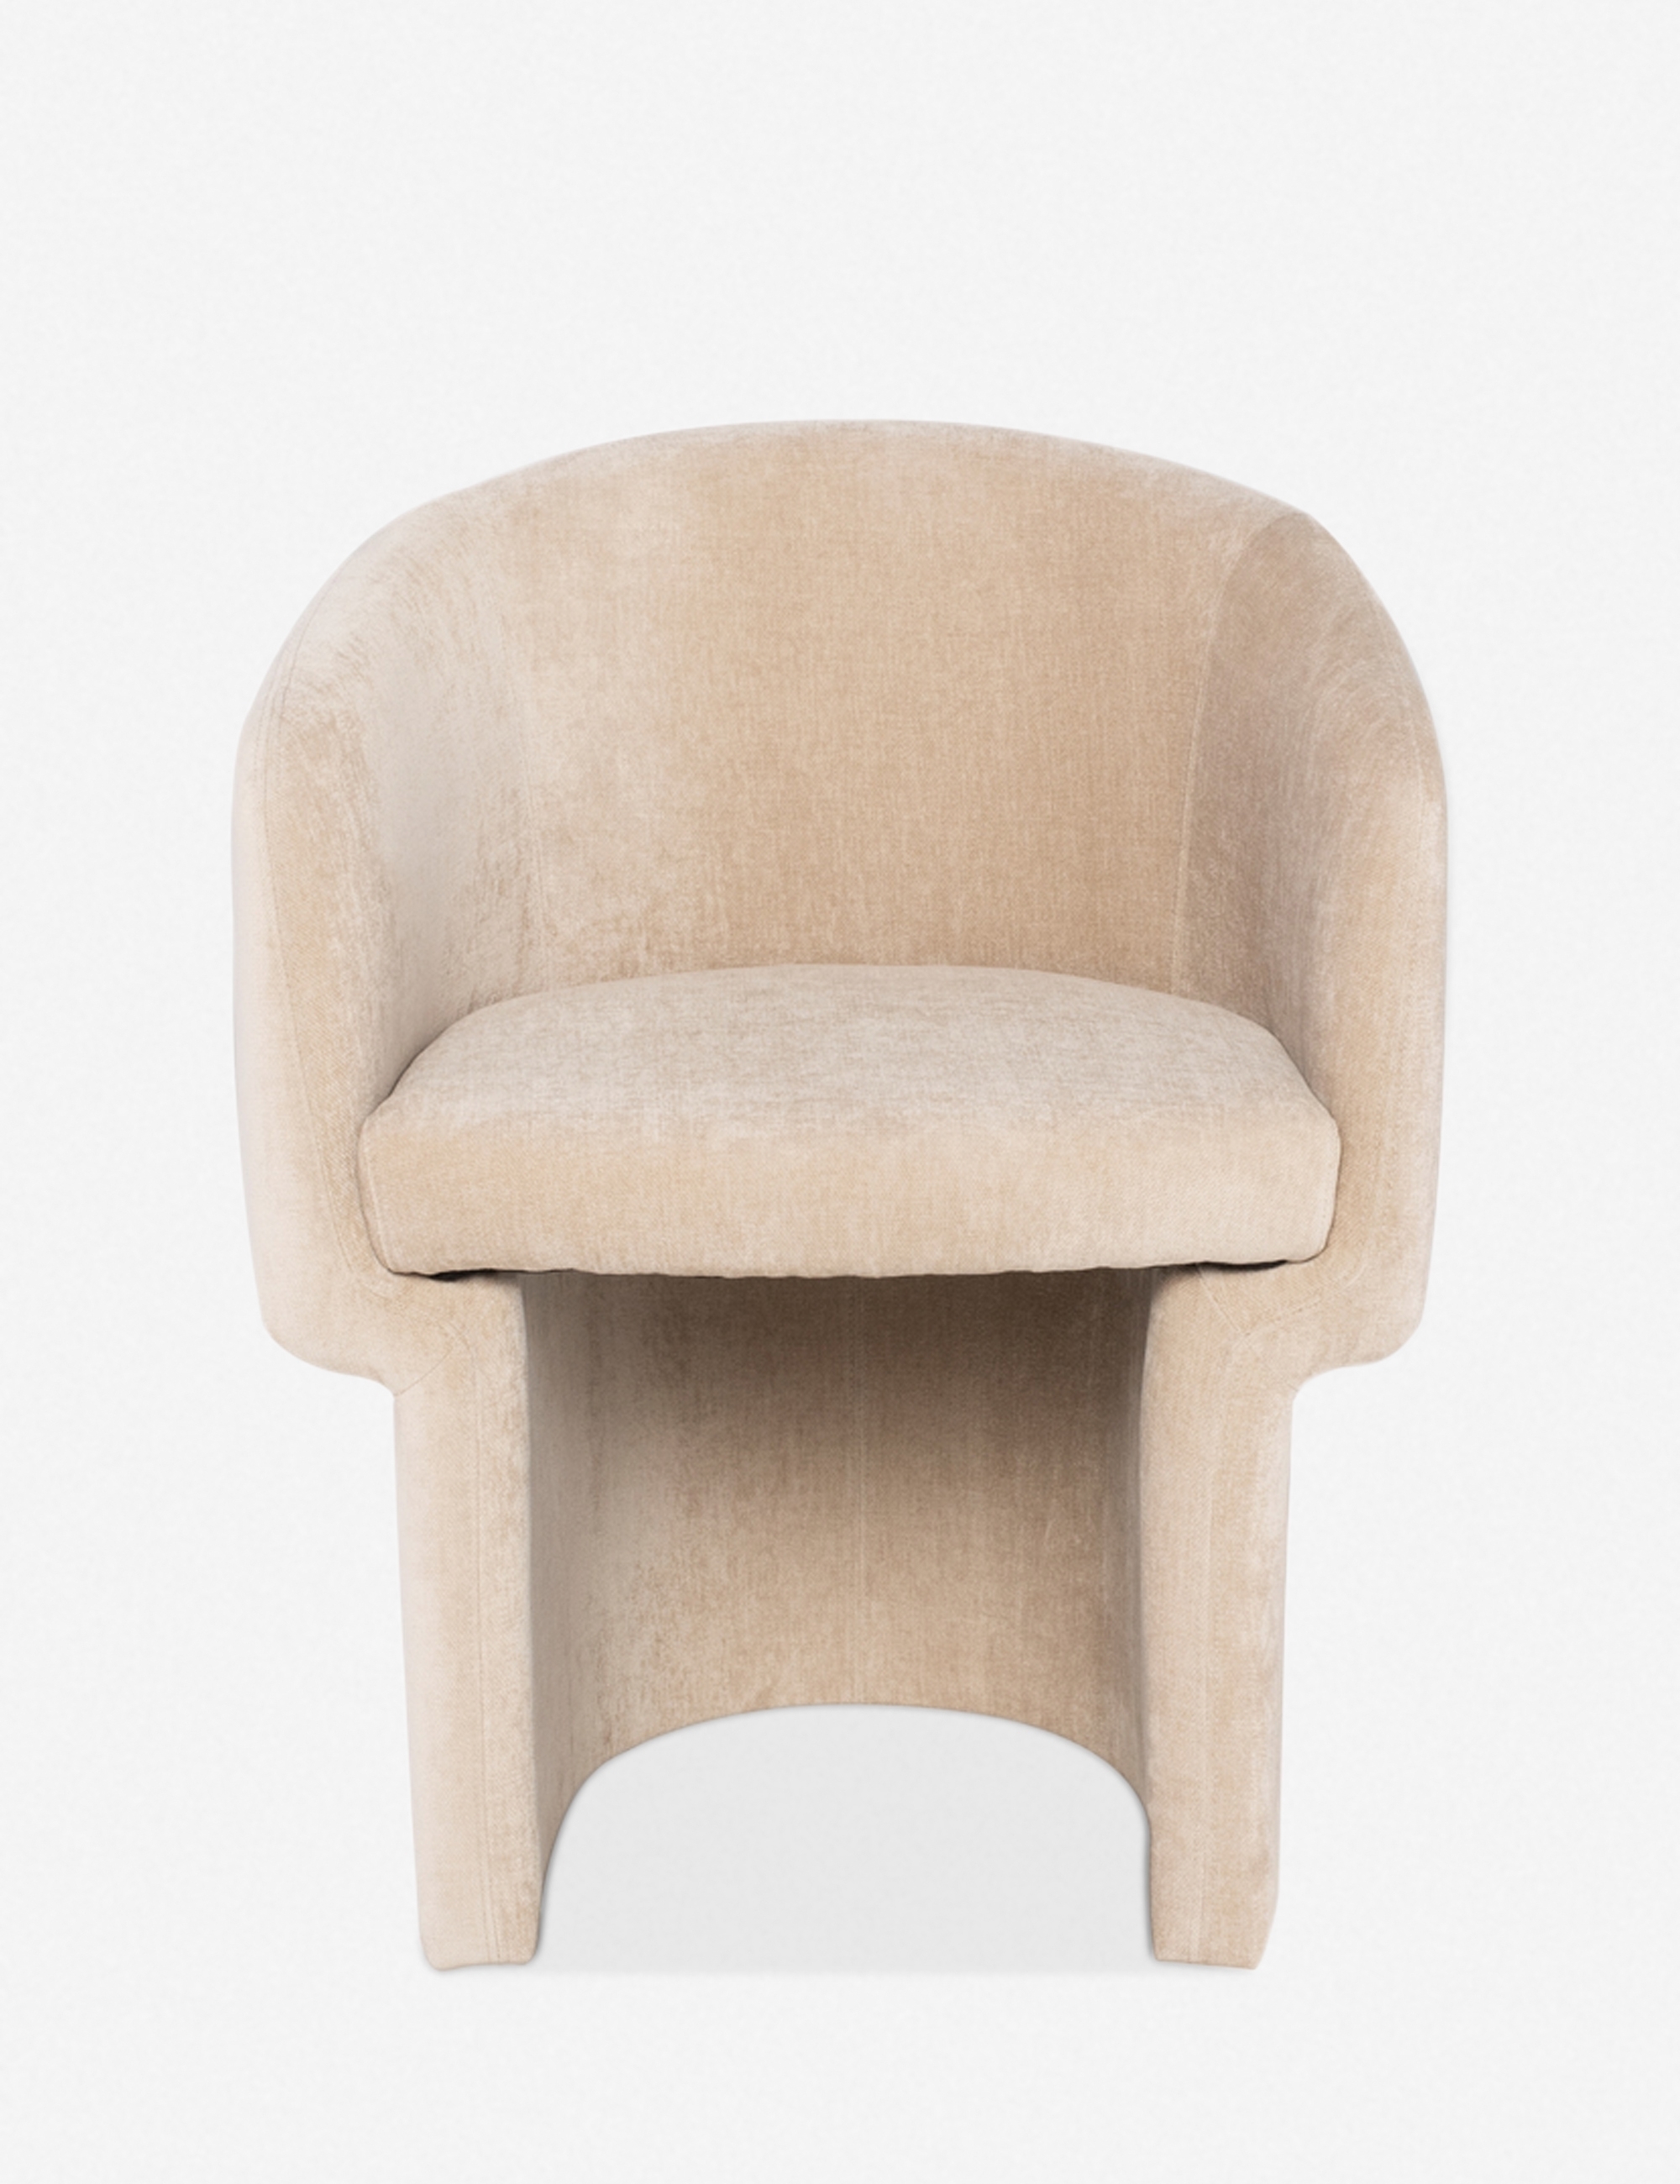 Pomona Dining Chair, Almond - Image 0